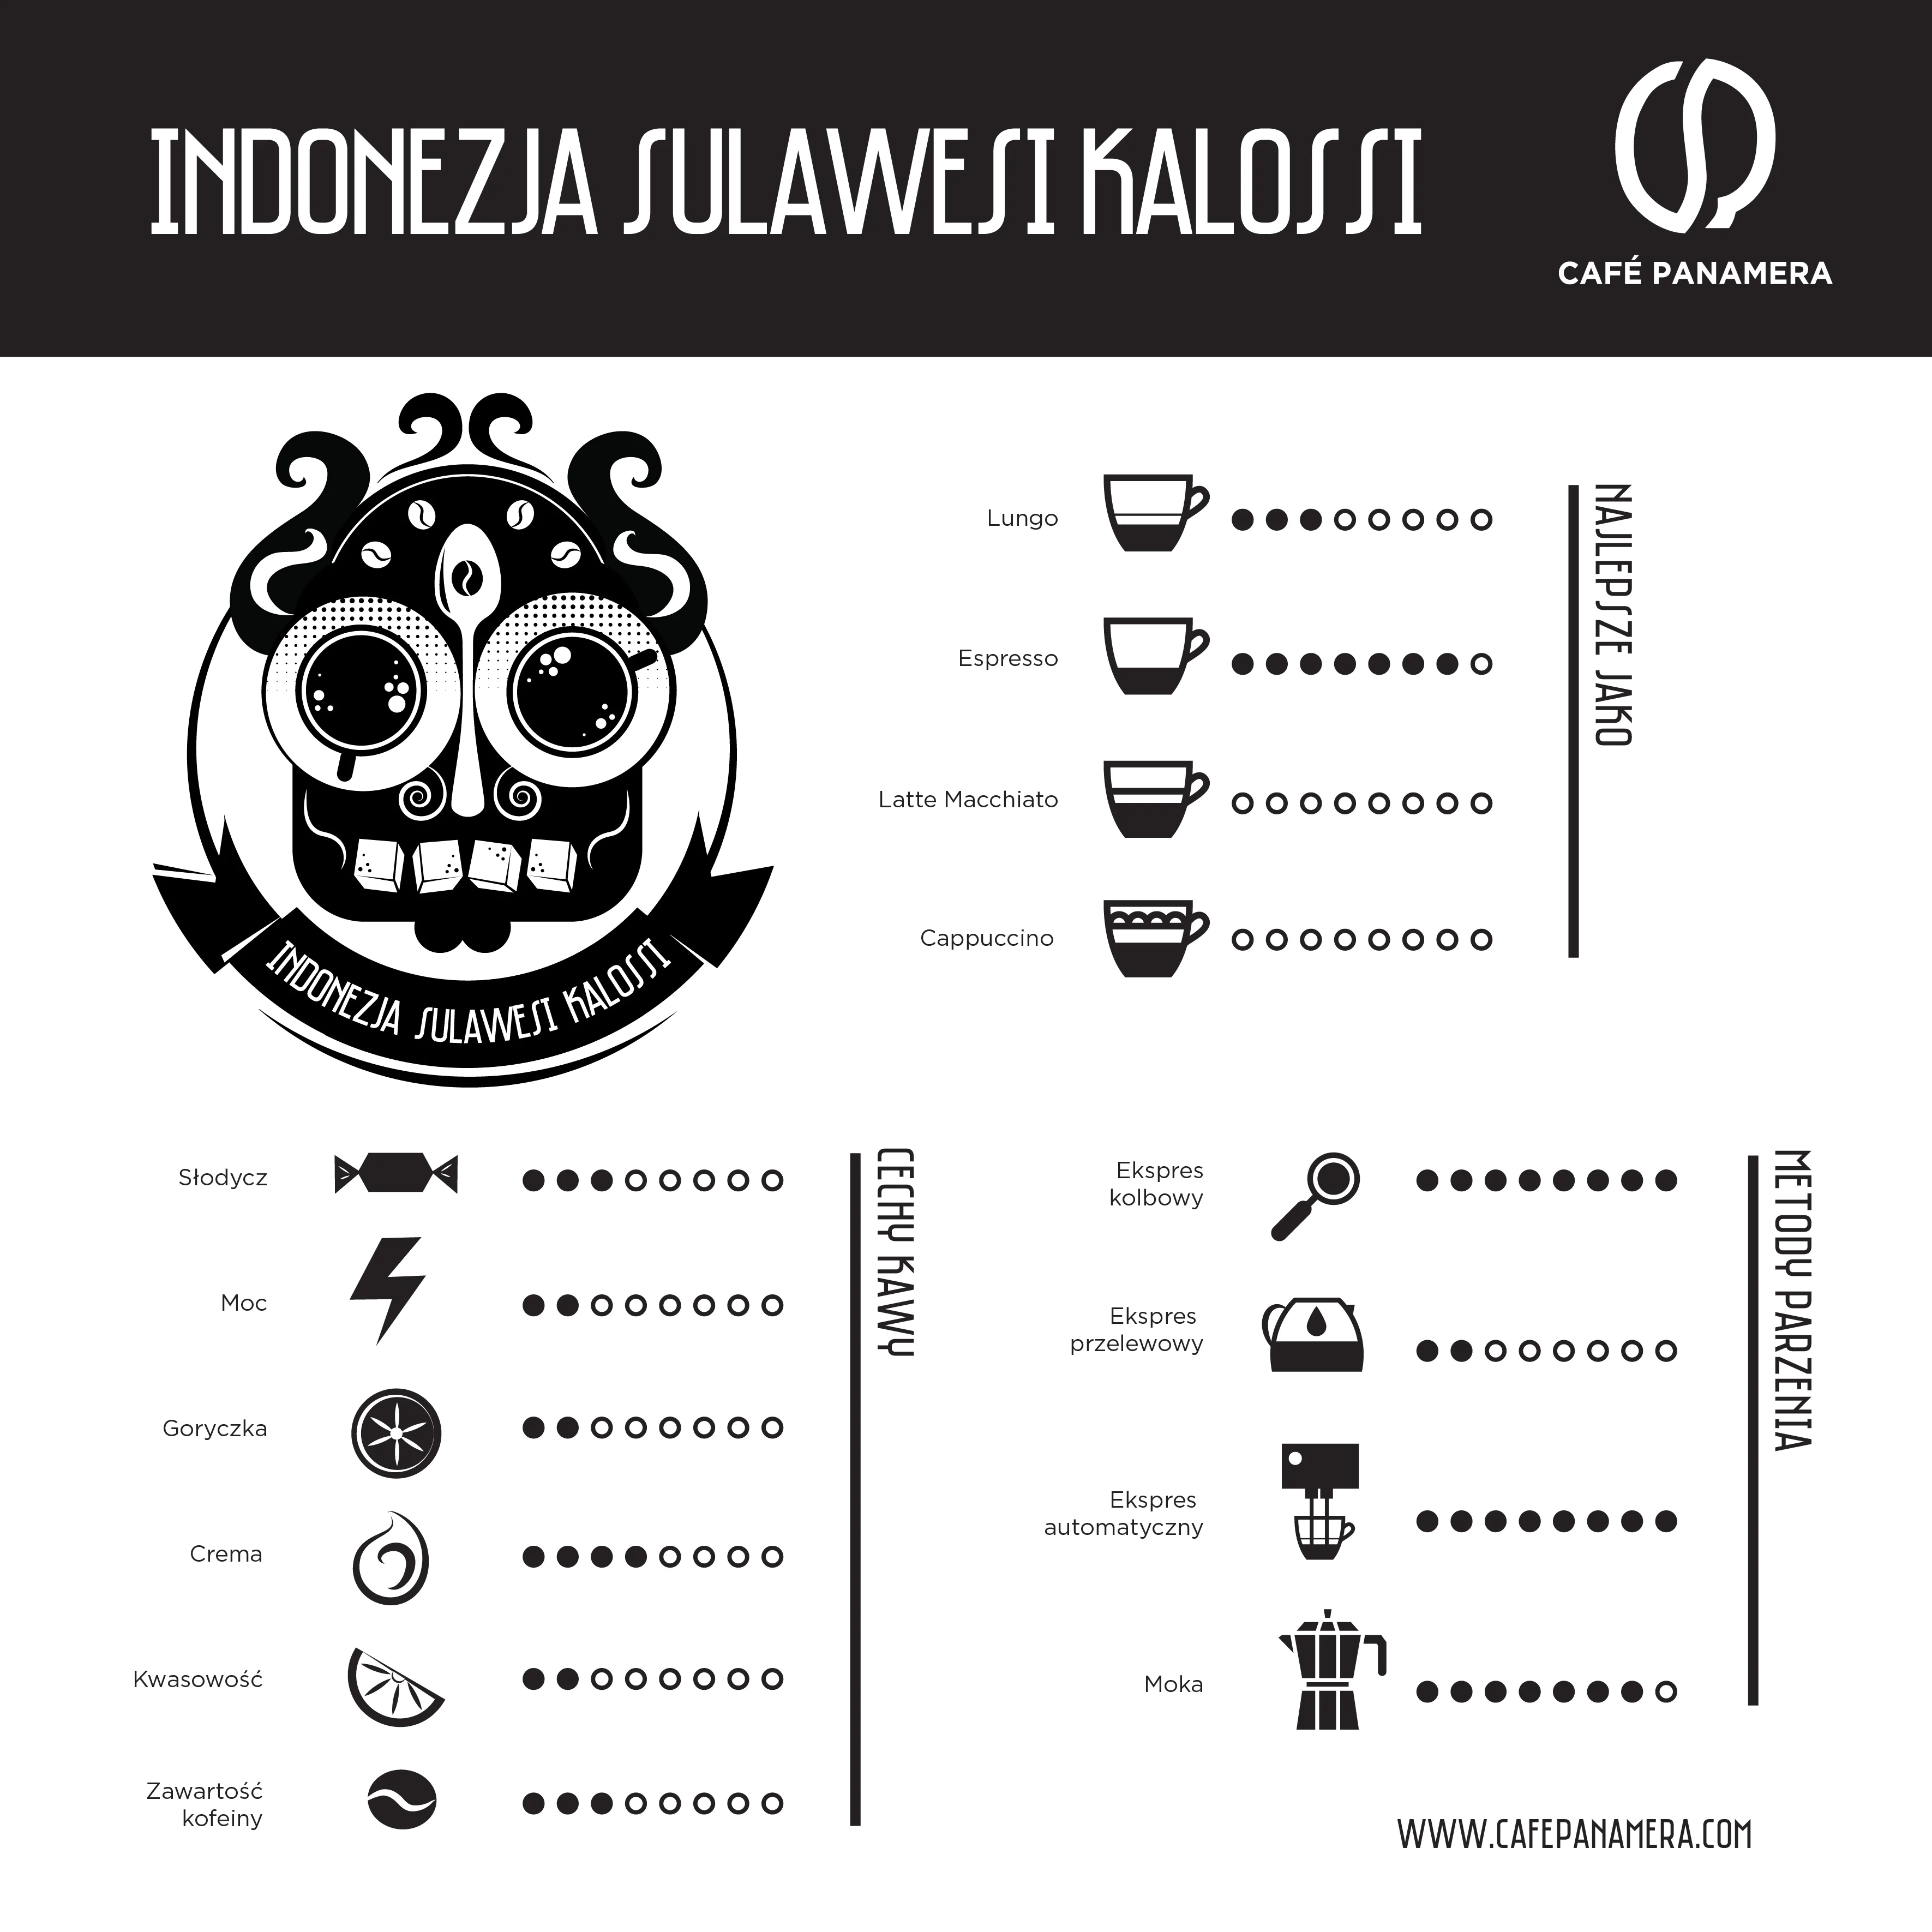 Cechy kaw Sulawesi Kalossi